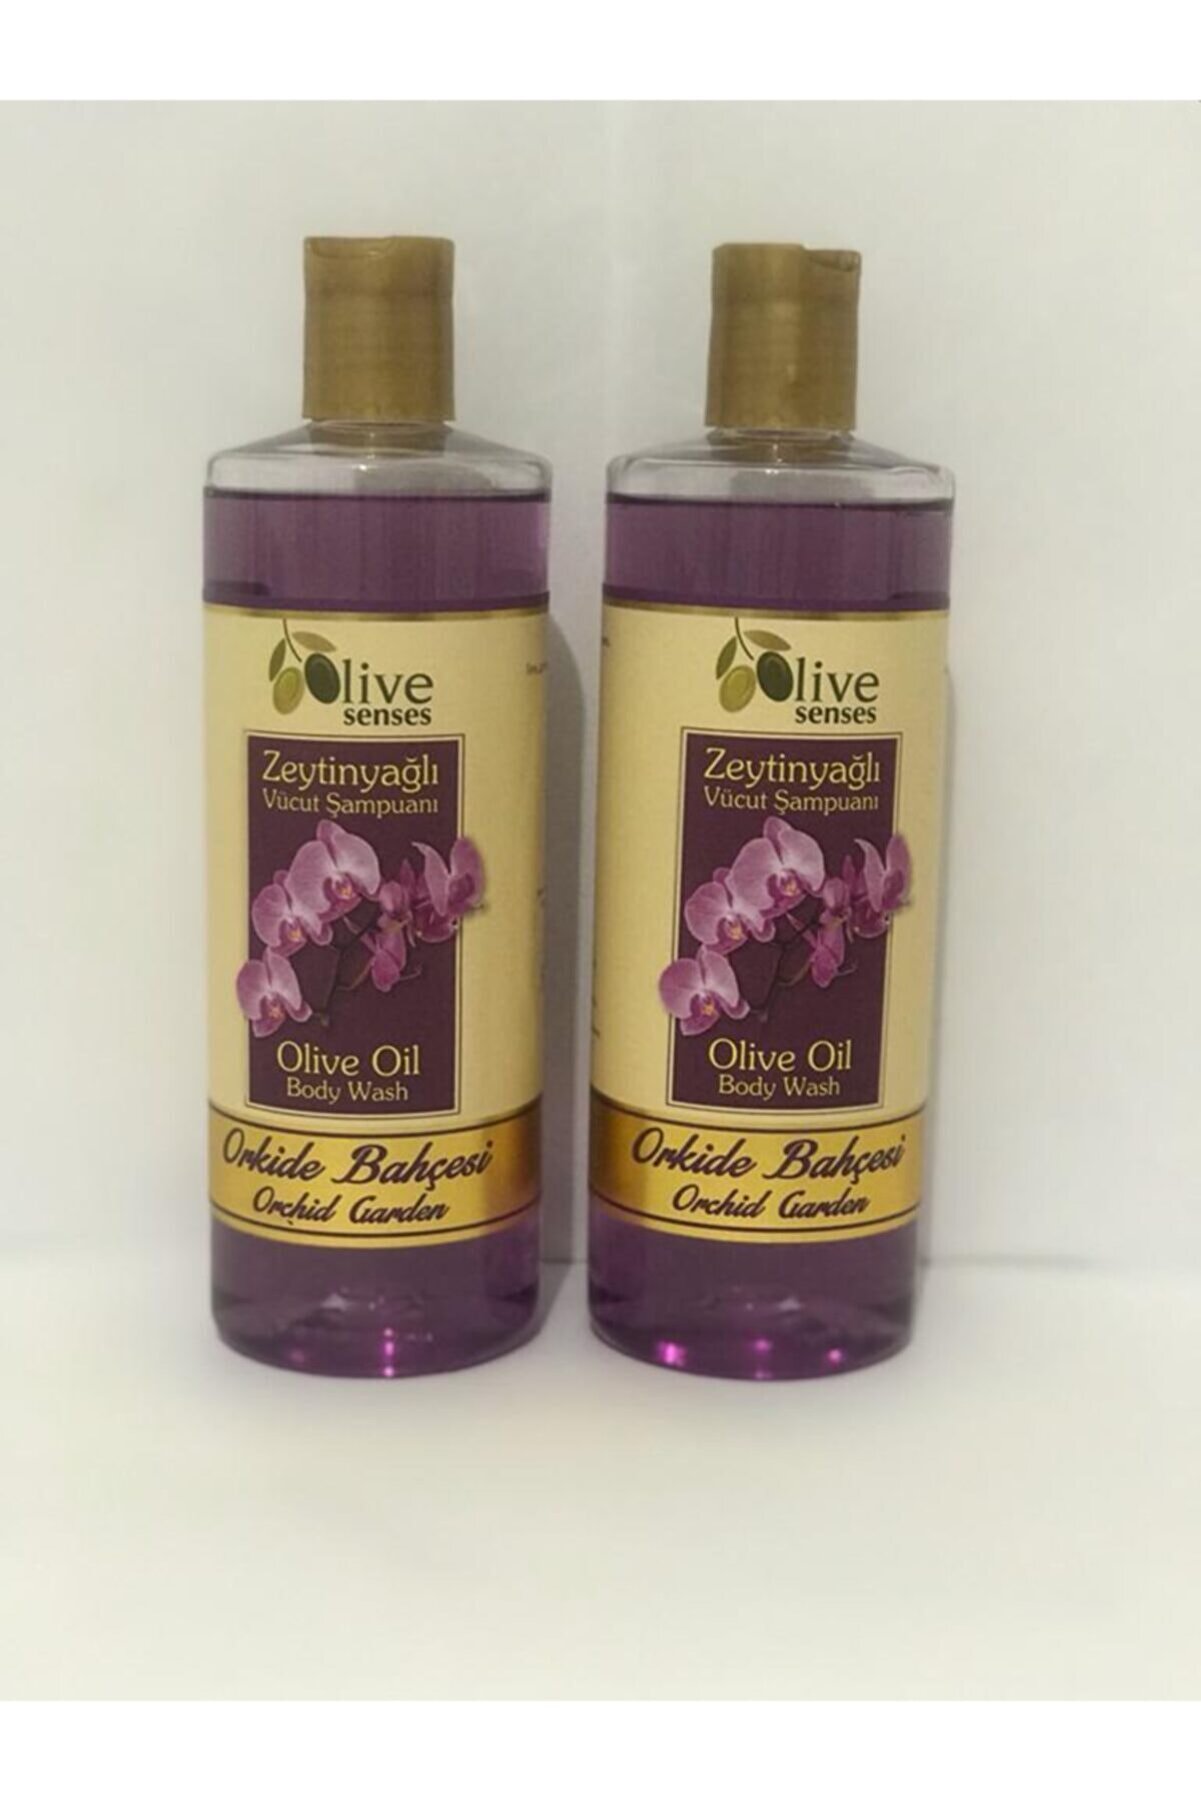 Oilive Olive Senses Zeytinyağlı Vücut Şampuanı Orkide Bahçesi 1 Alana 1 Bedava